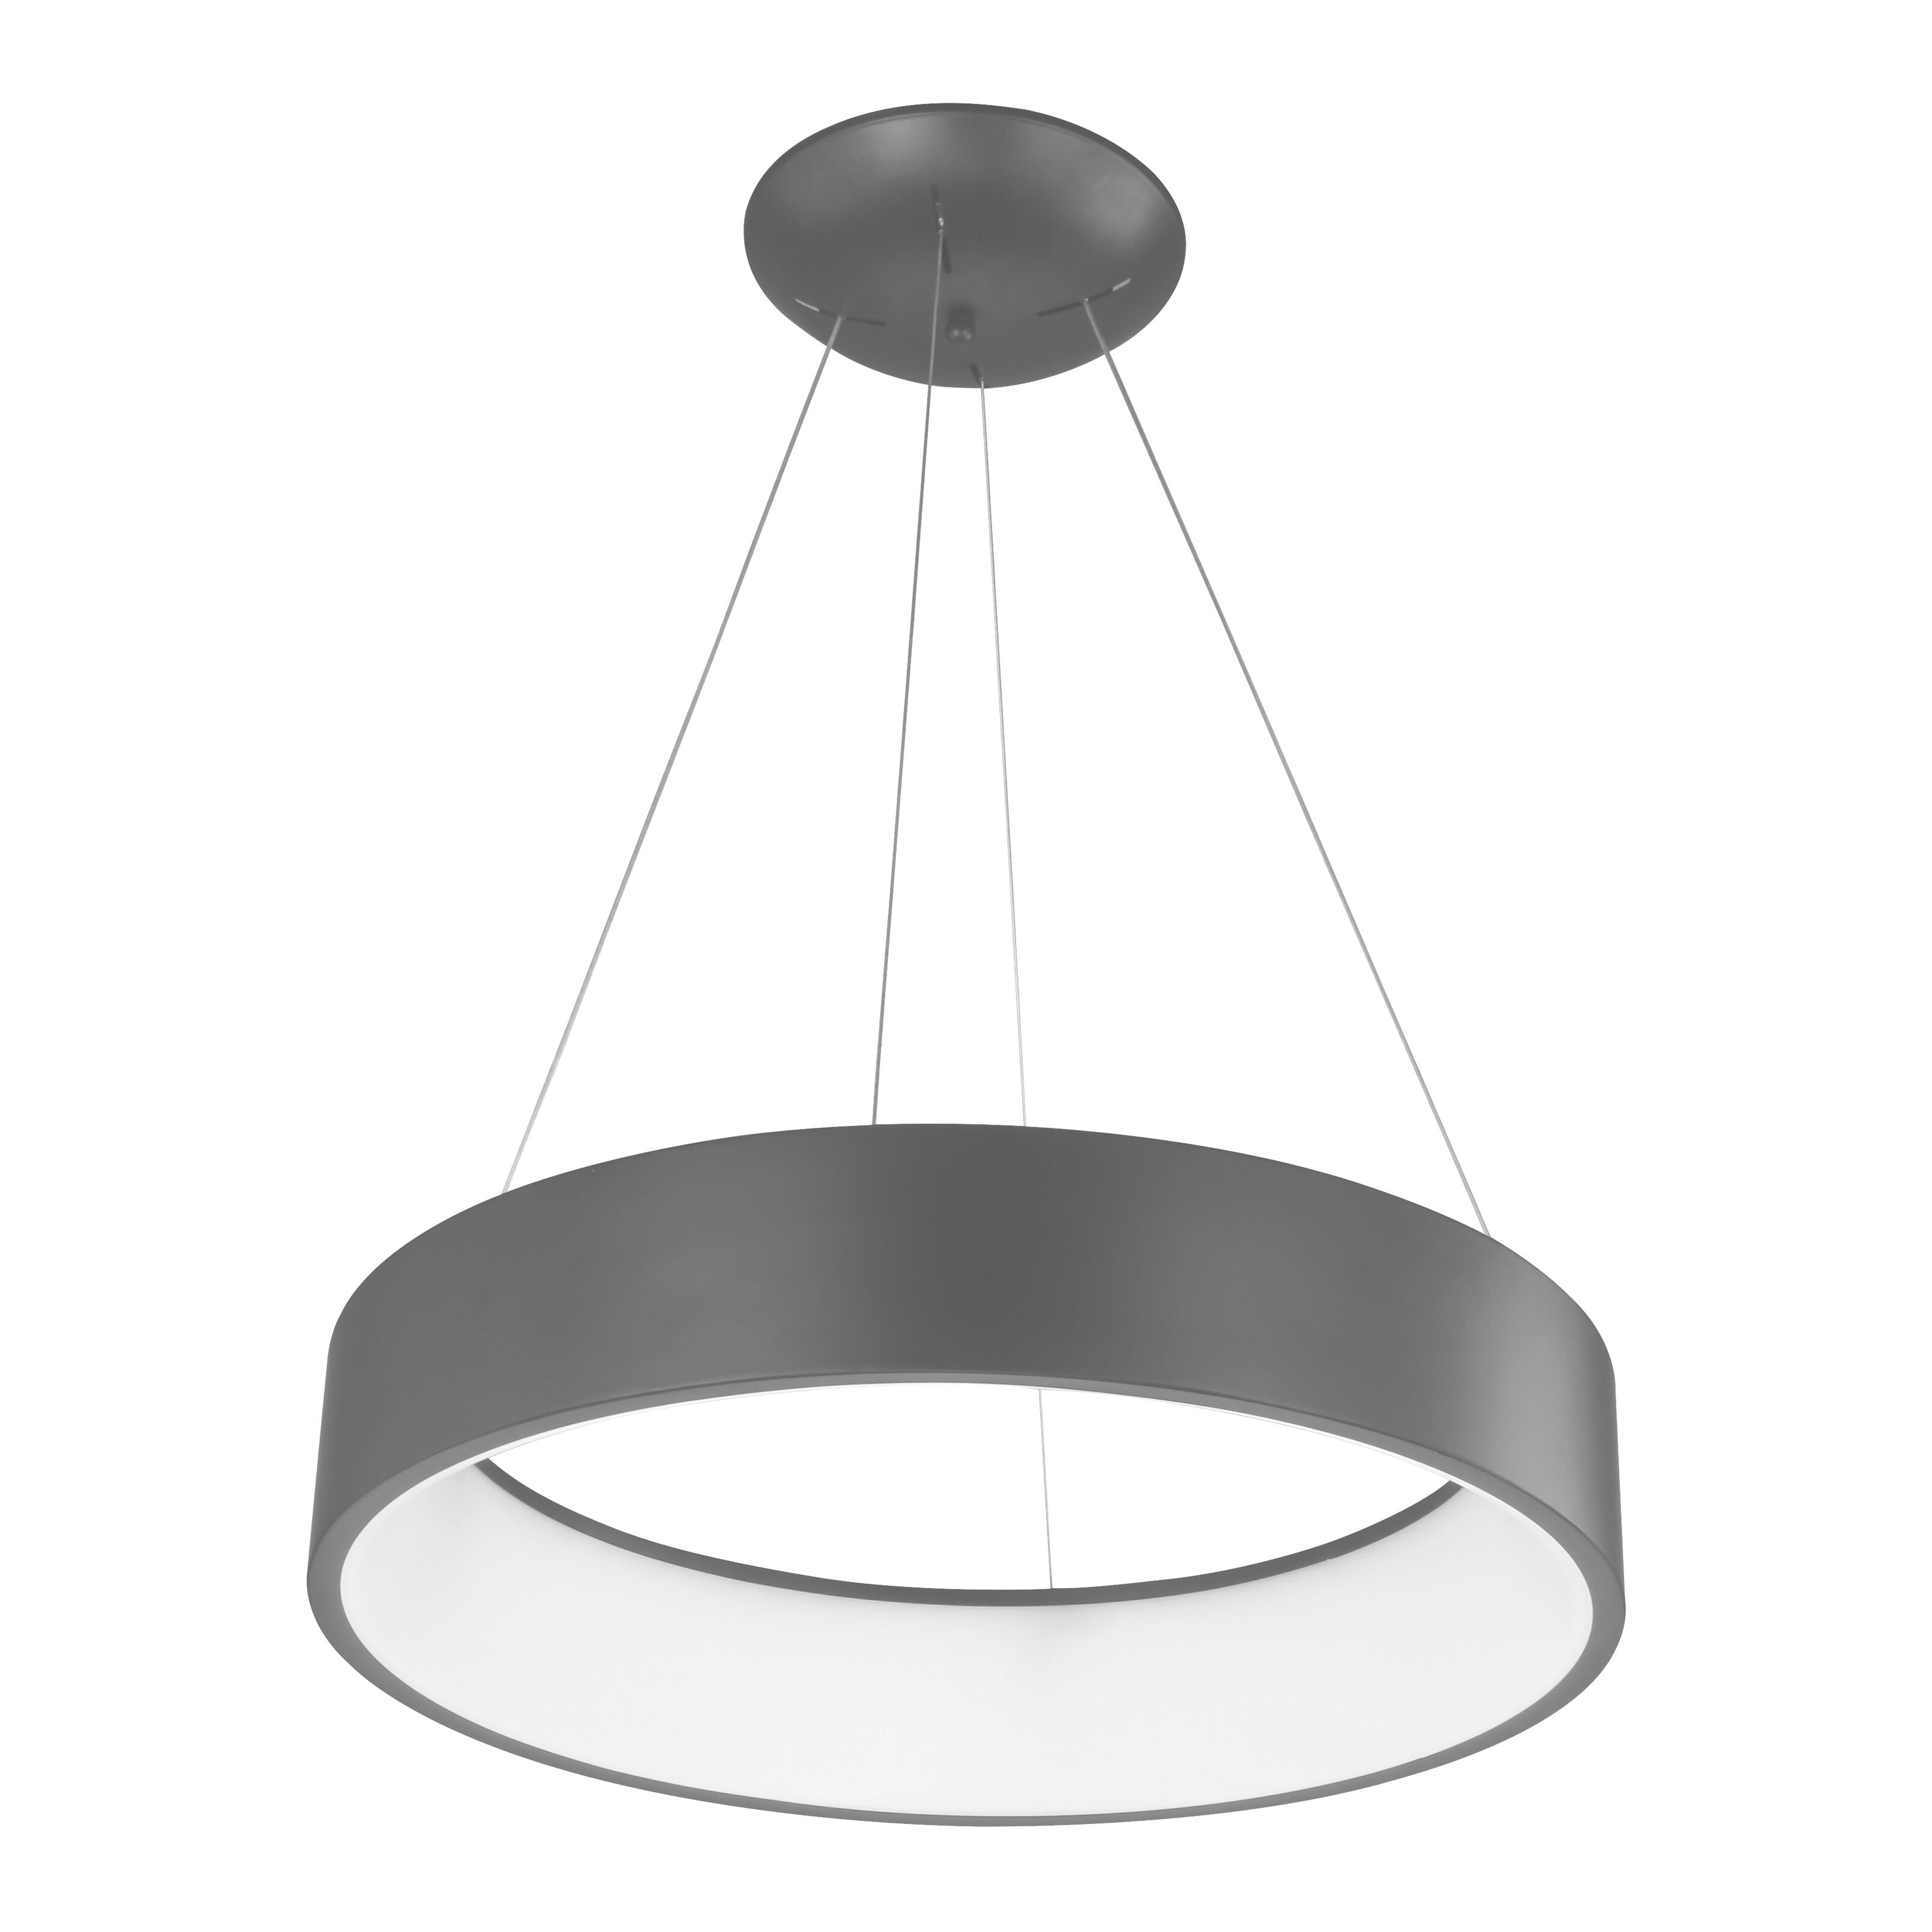 Lampadario Design Pure grigio, in metallo, D. 45 cm, WOFI - 2